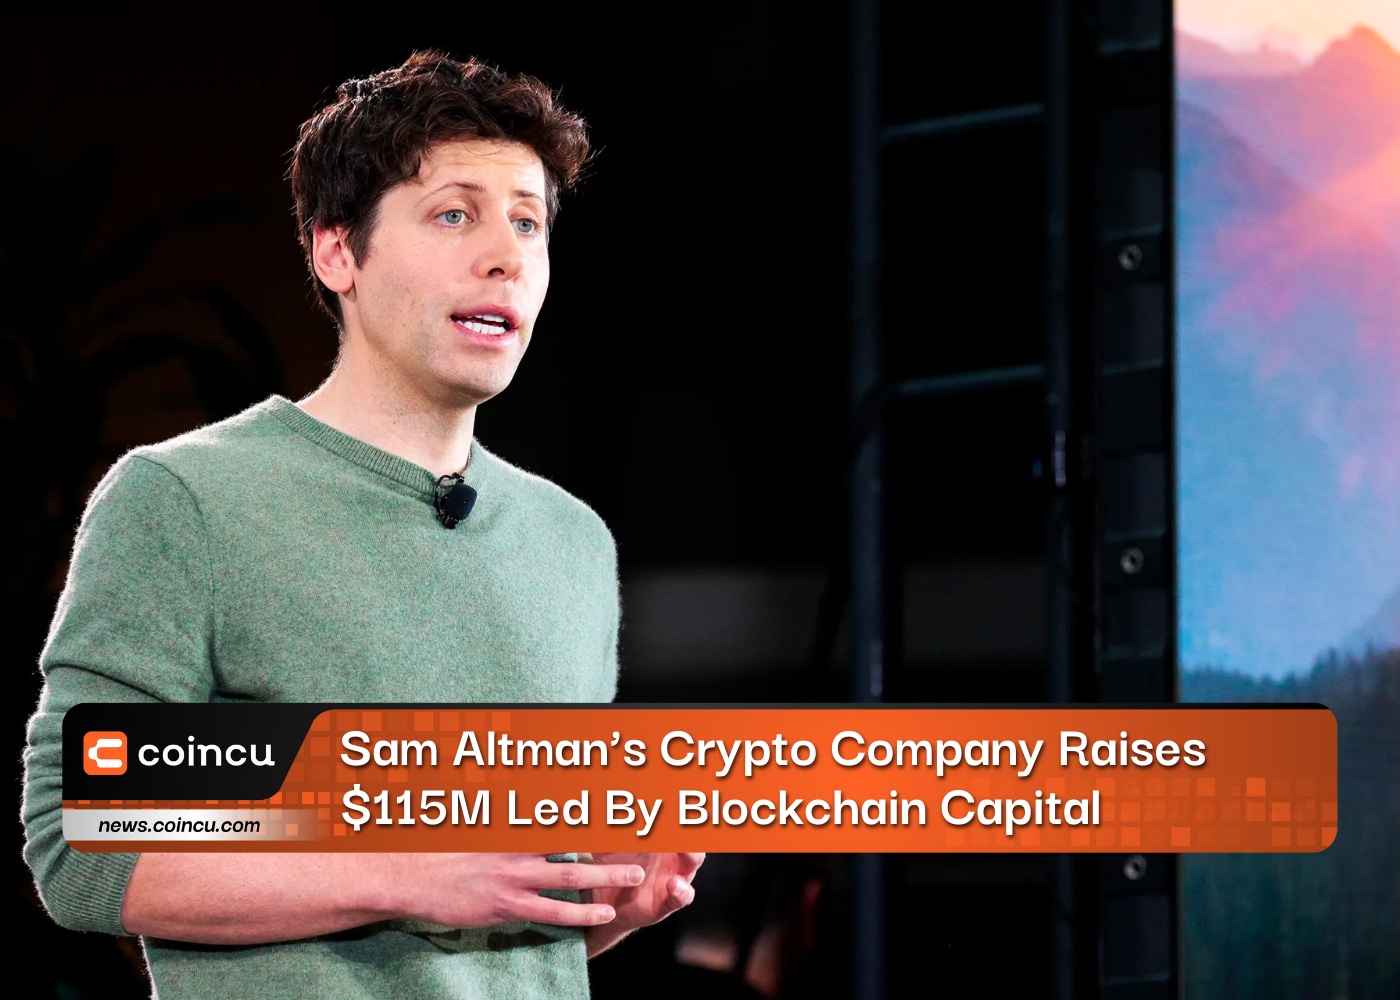 Sam Altman’s Crypto Company Raises $115M Led By Blockchain Capital